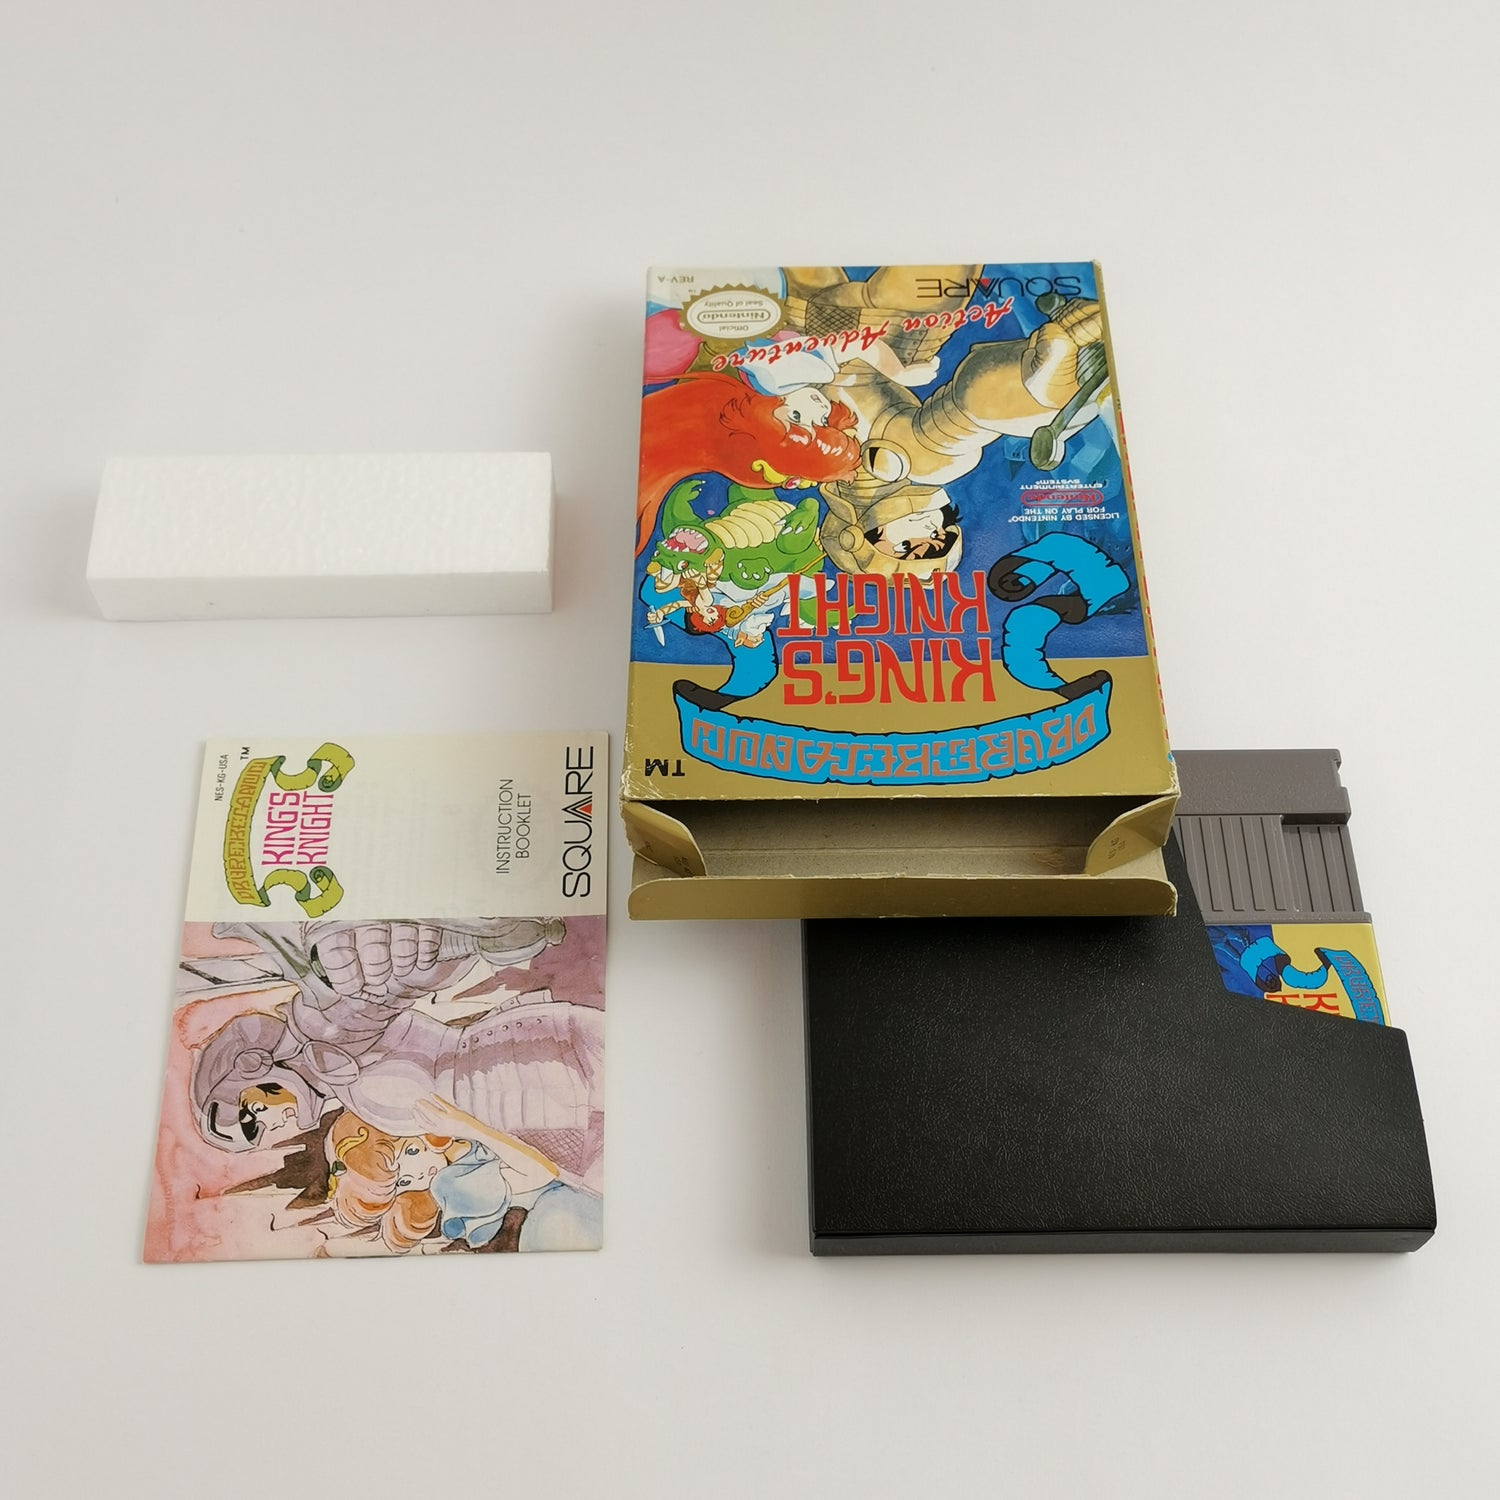 Nintendo Entertainment System Game: King's Knight - Square | NES original packaging NTSC USA